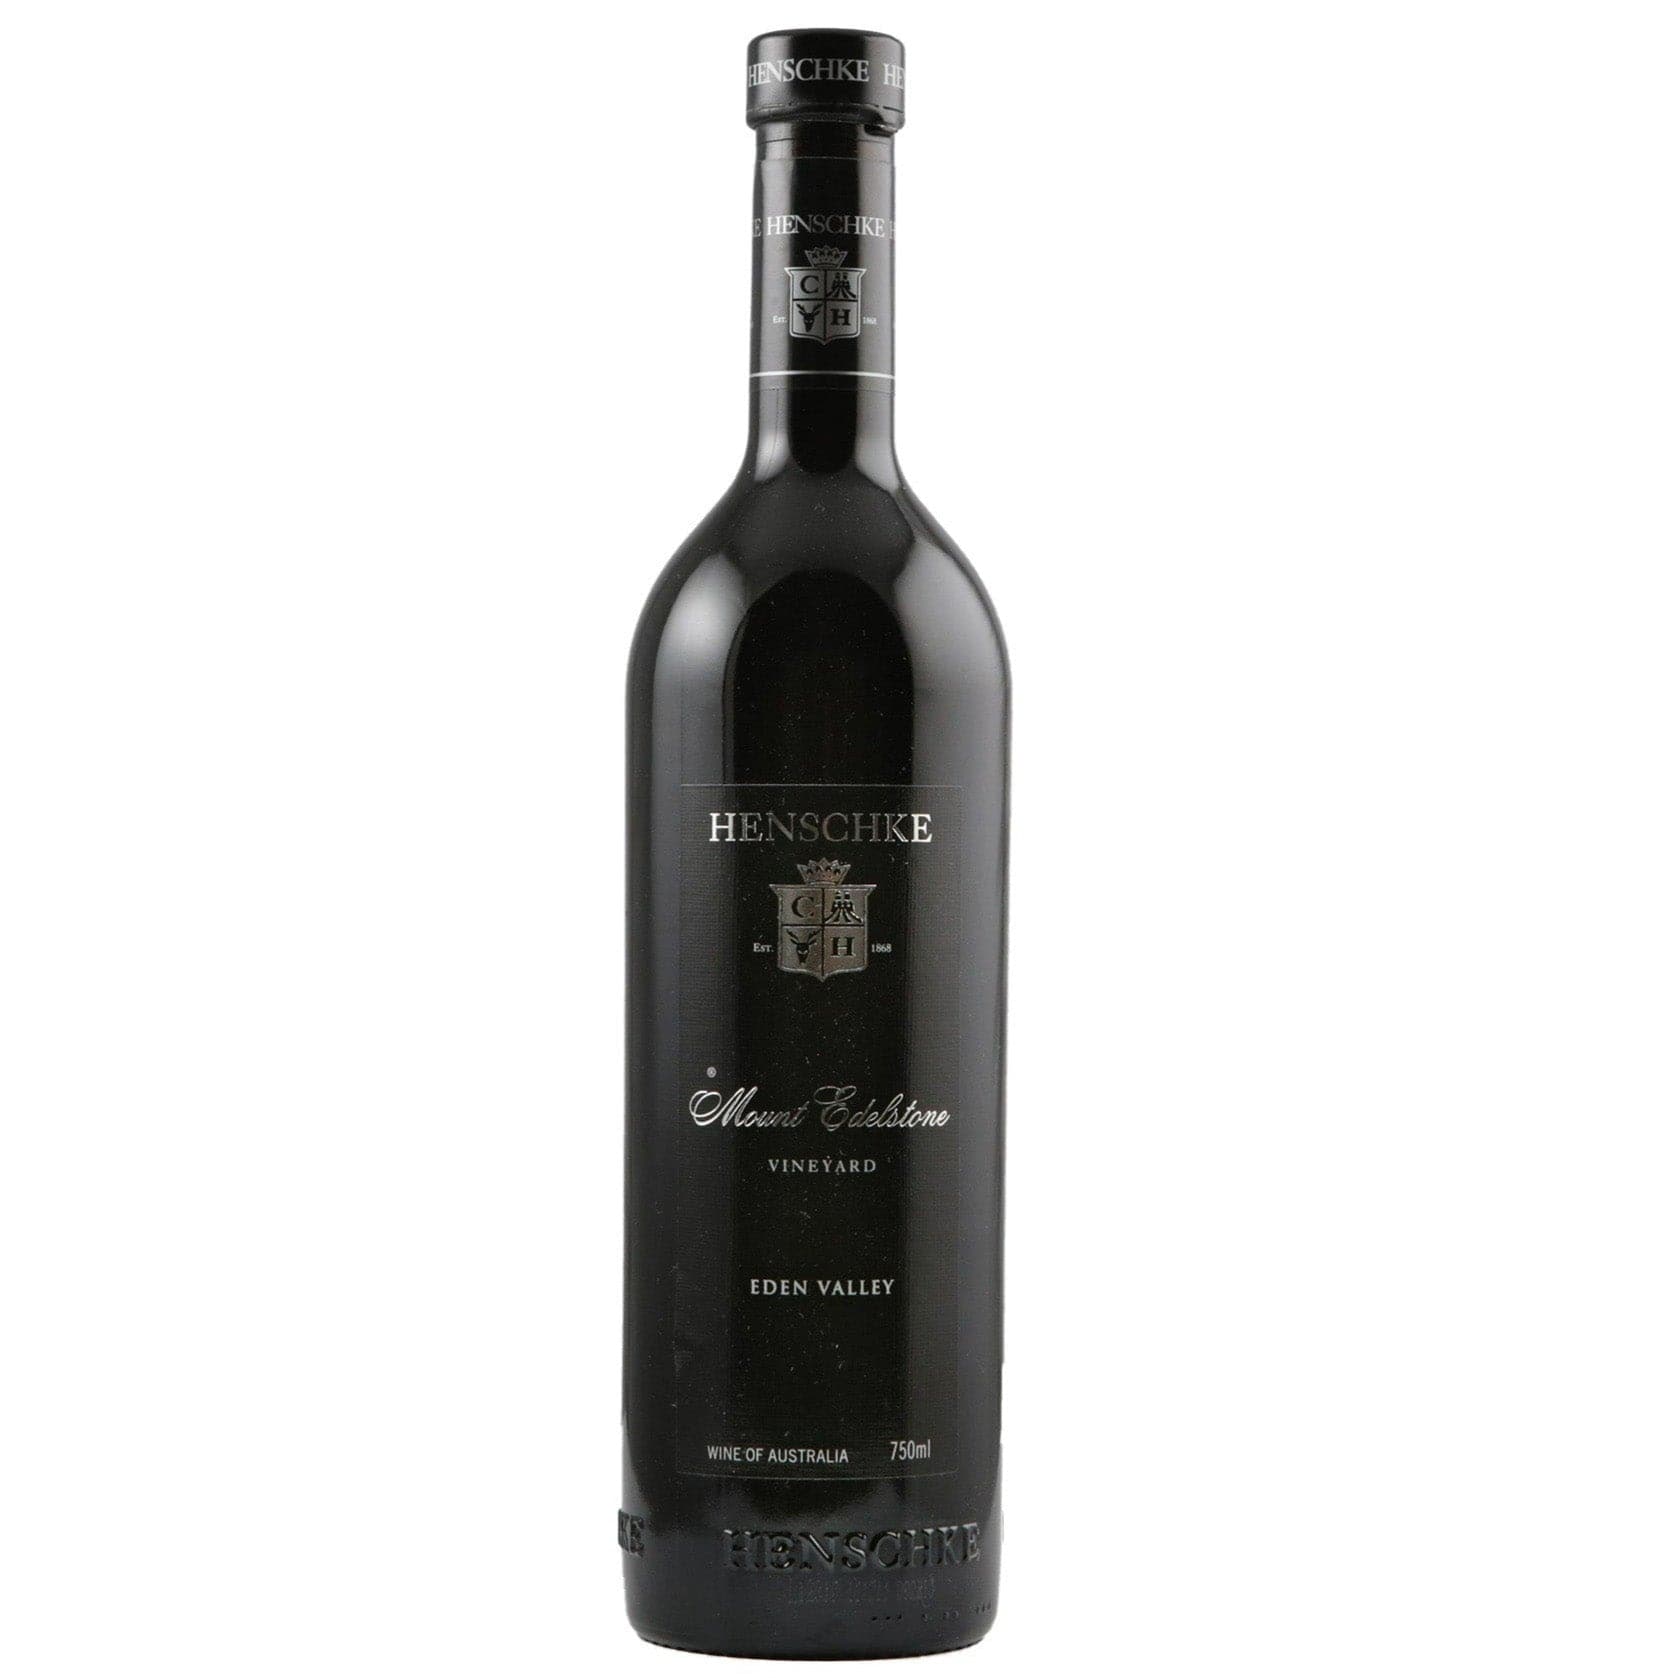 Single bottle of Red wine Henschke, Mount Edelstone Shiraz, Eden Valley, 2006 100% Shiraz